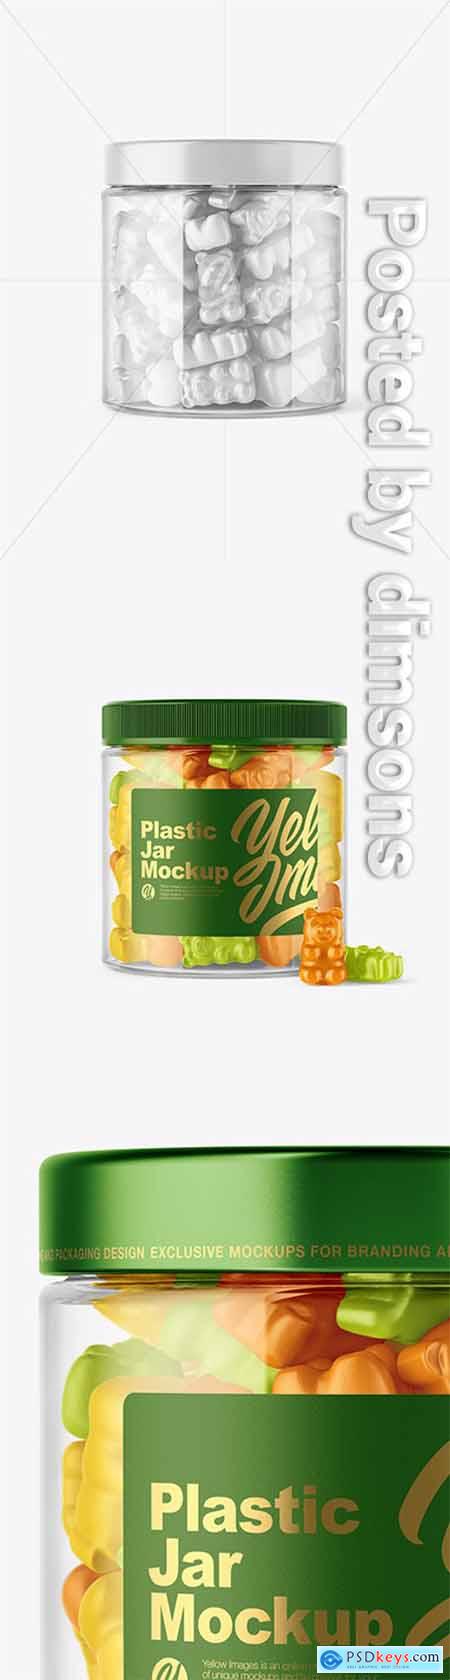 Download Plastic Jar With Gummies Mockup 44763 Free Download Photoshop Vector Stock Image Via Torrent Zippyshare From Psdkeys Com